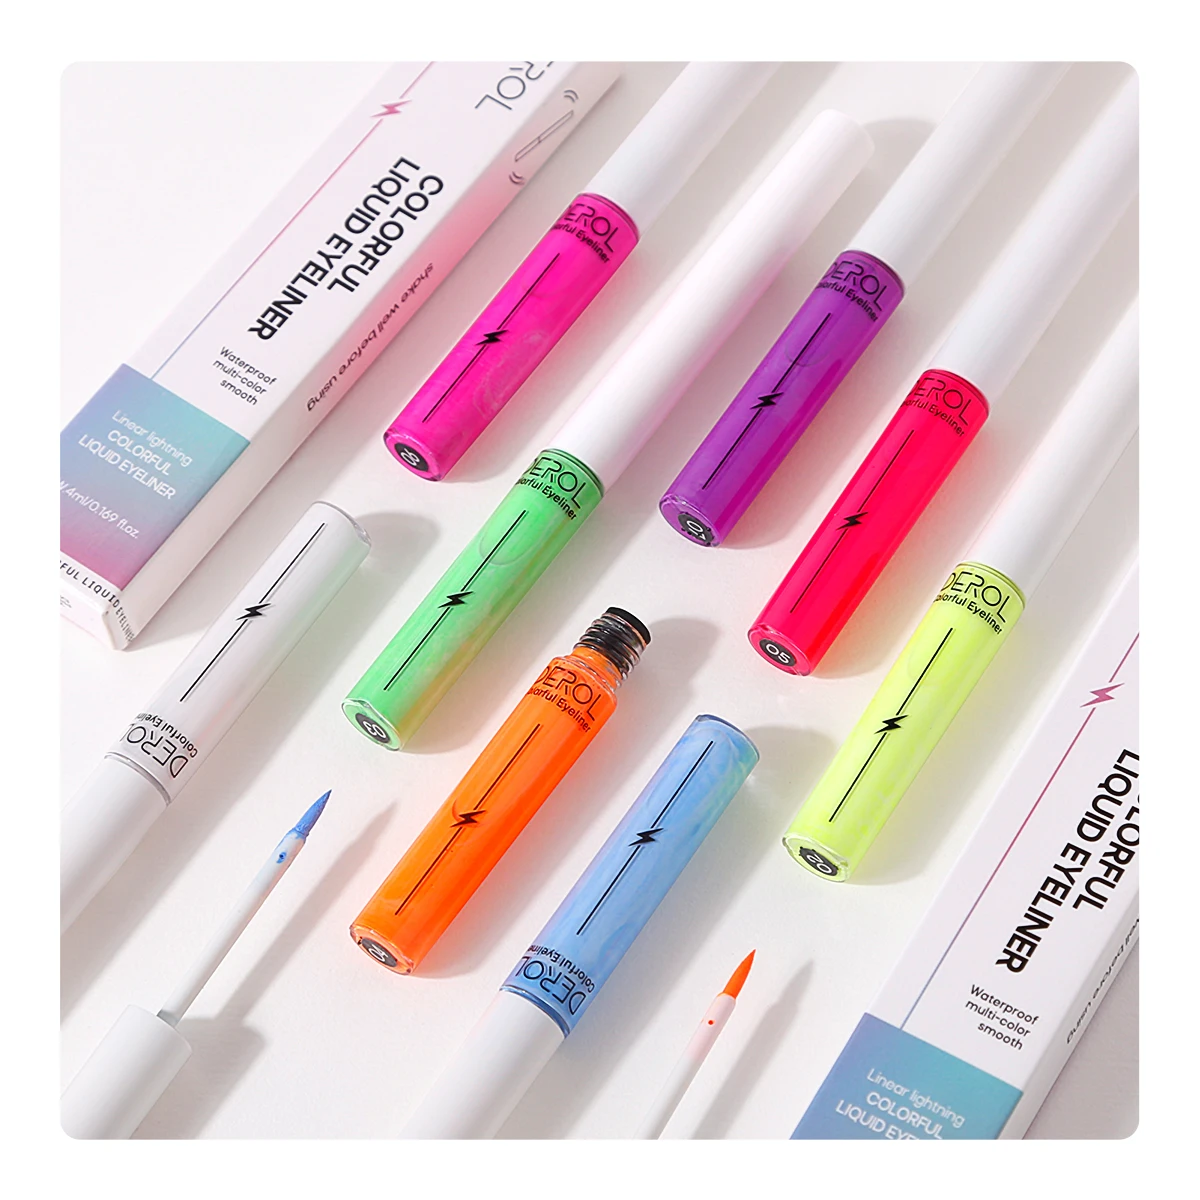 

Custom logo makeup beauty private label fluorescence neon 8 colorful liquid eyeliner pen